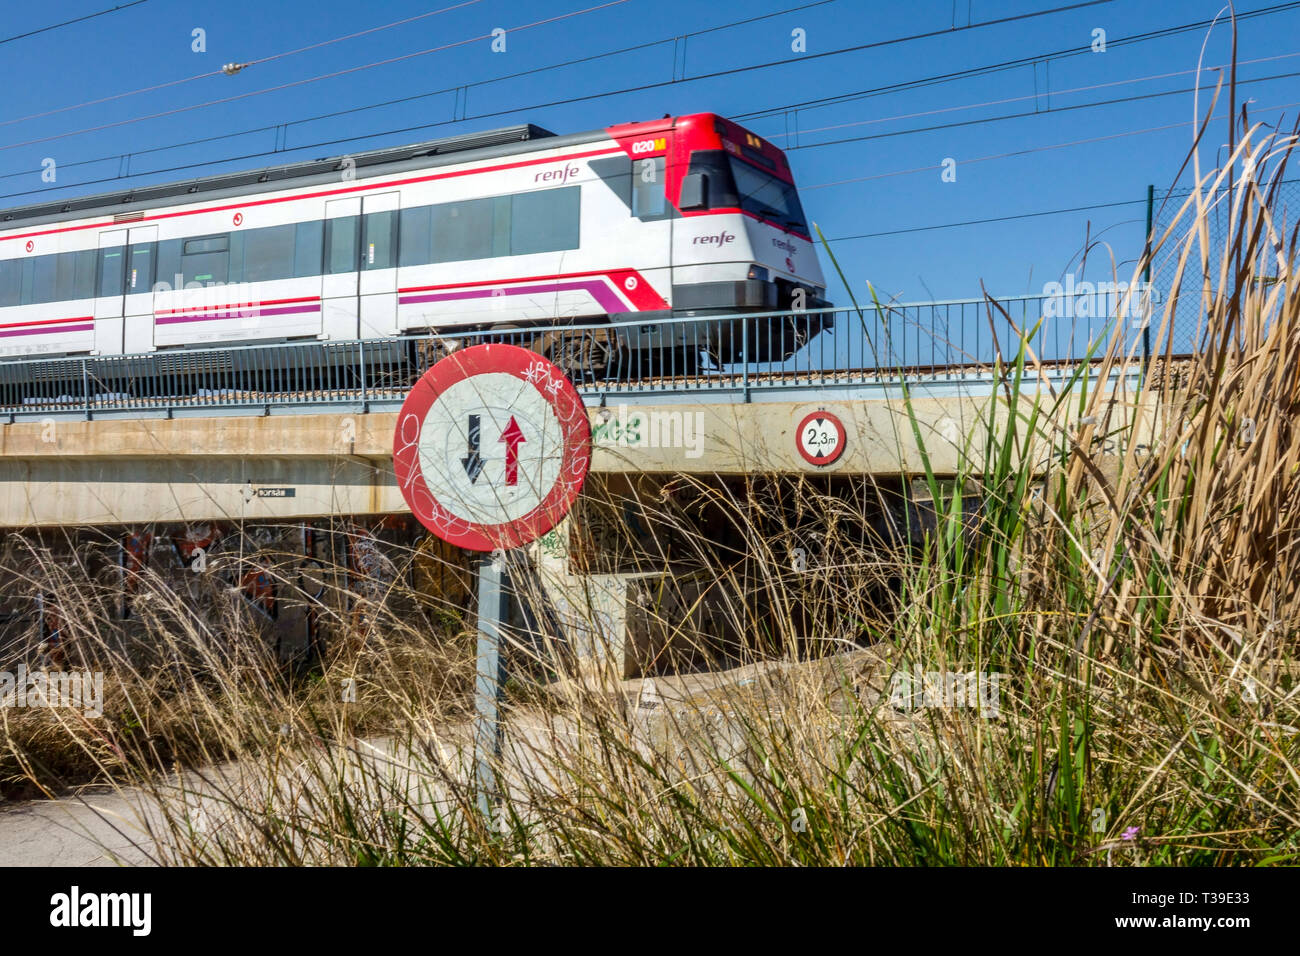 Spain train railway landscape scenery, Valencia region, Europe Stock Photo